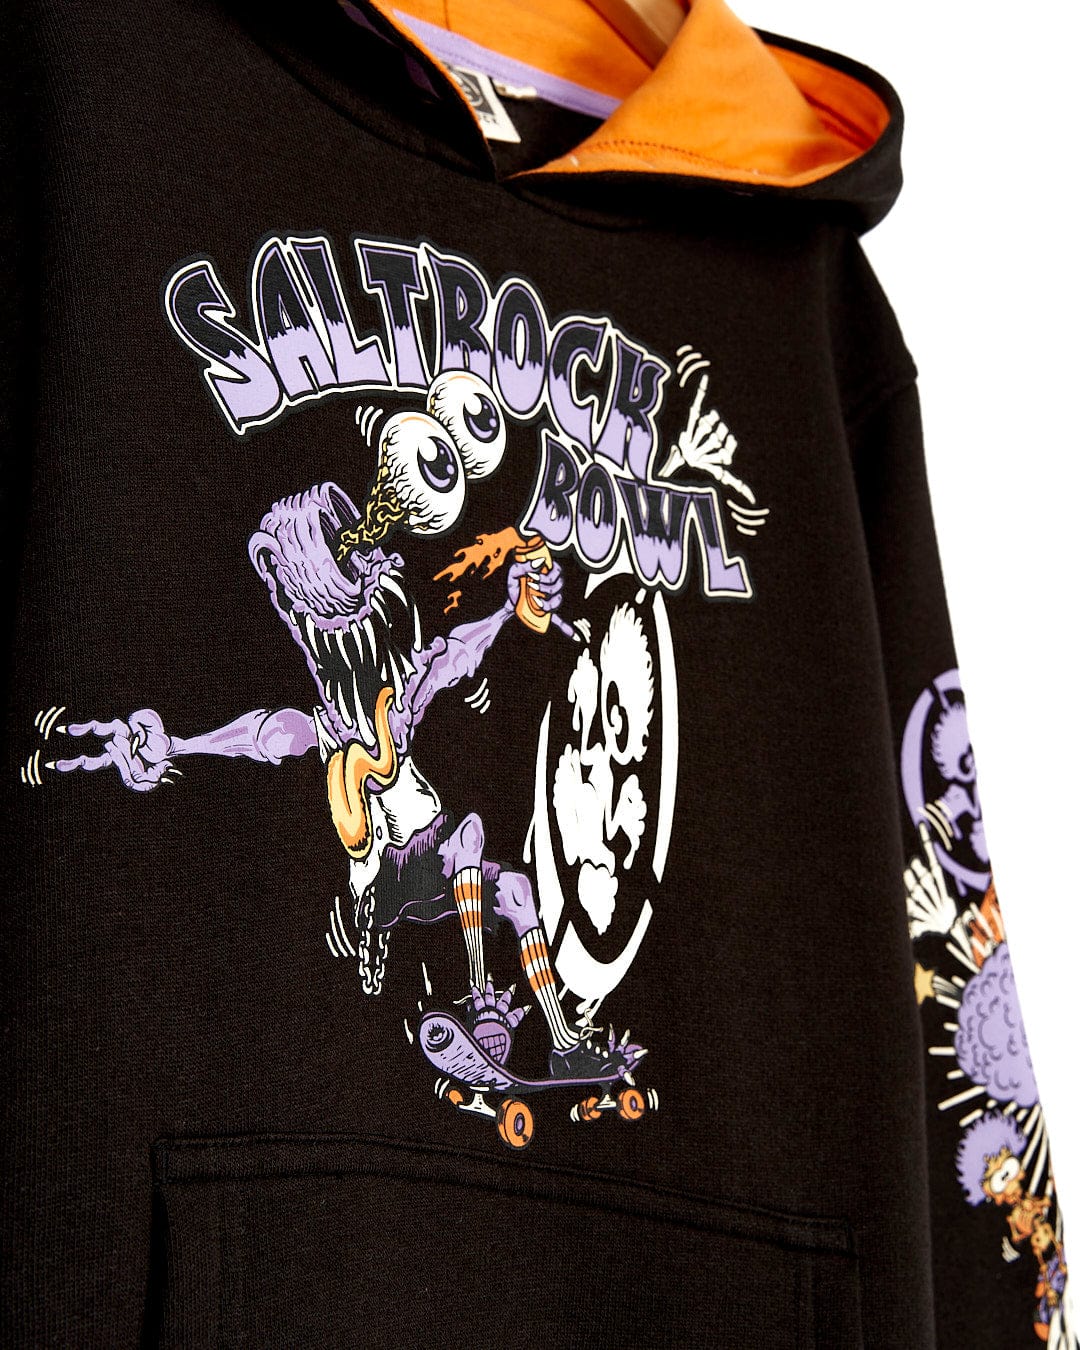 A Saltrock Kids Pop Hoodie - Black with a cartoon character on it.